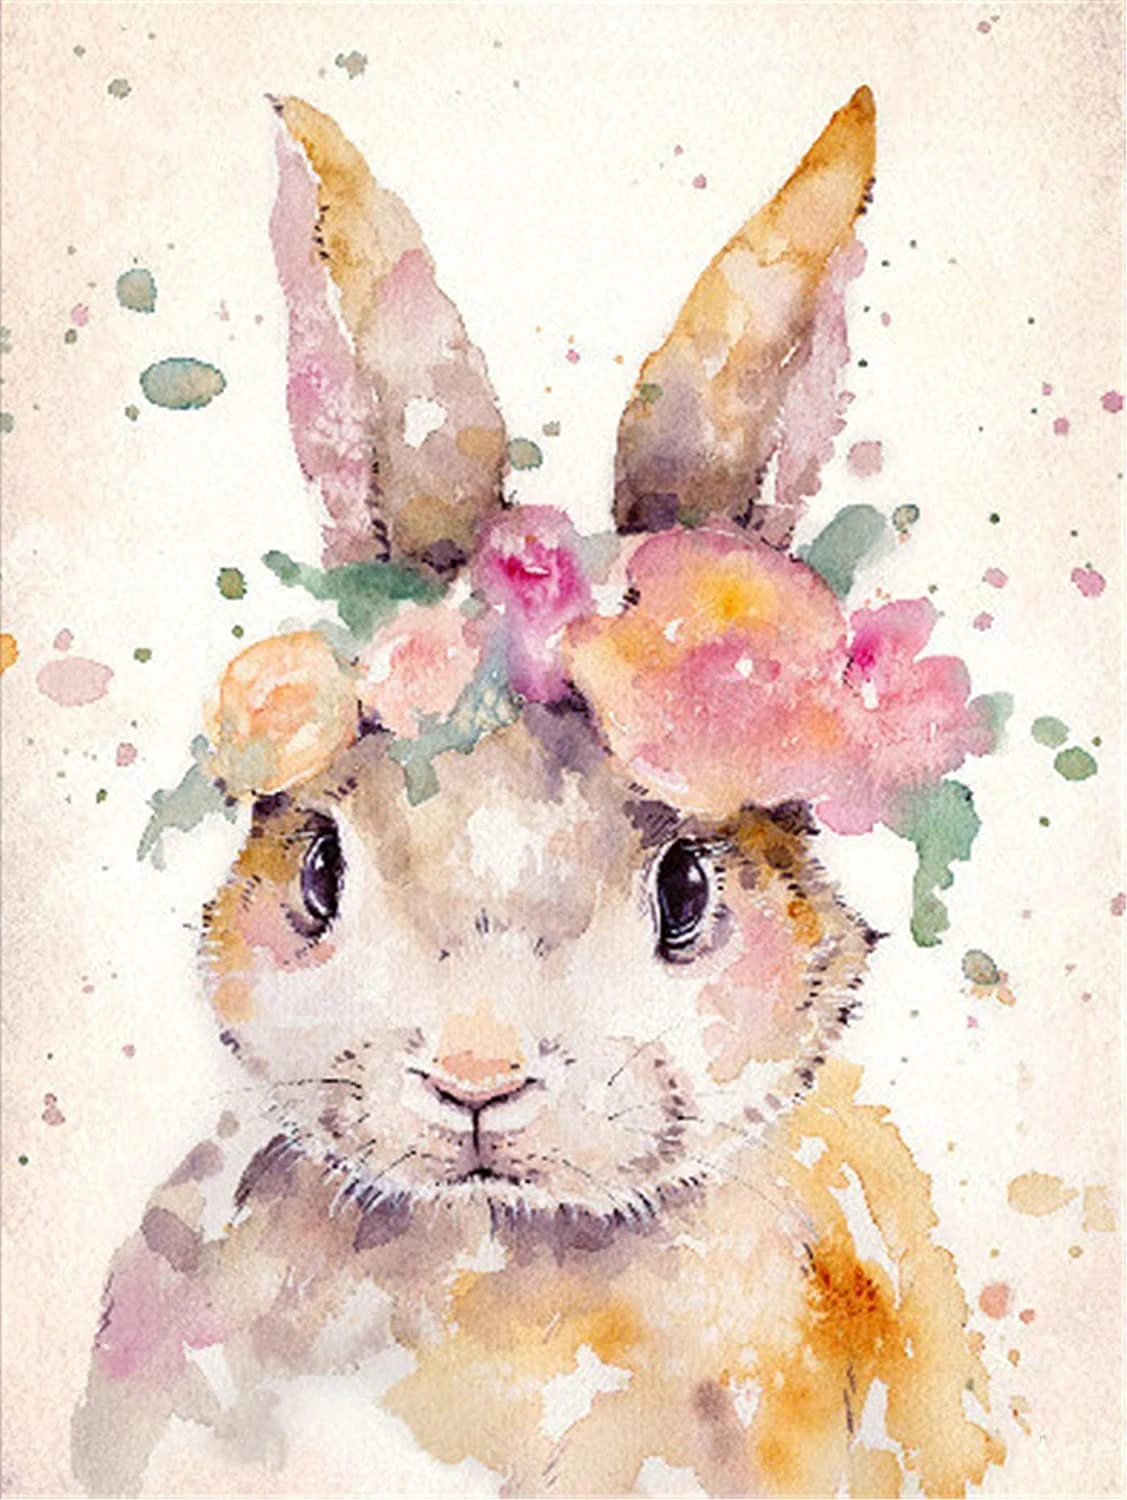 

JMINE Div 5D Rabbit bunny flower Full Diamond Painting cross stitch kits art High Quality Animal 3D paint by diamonds